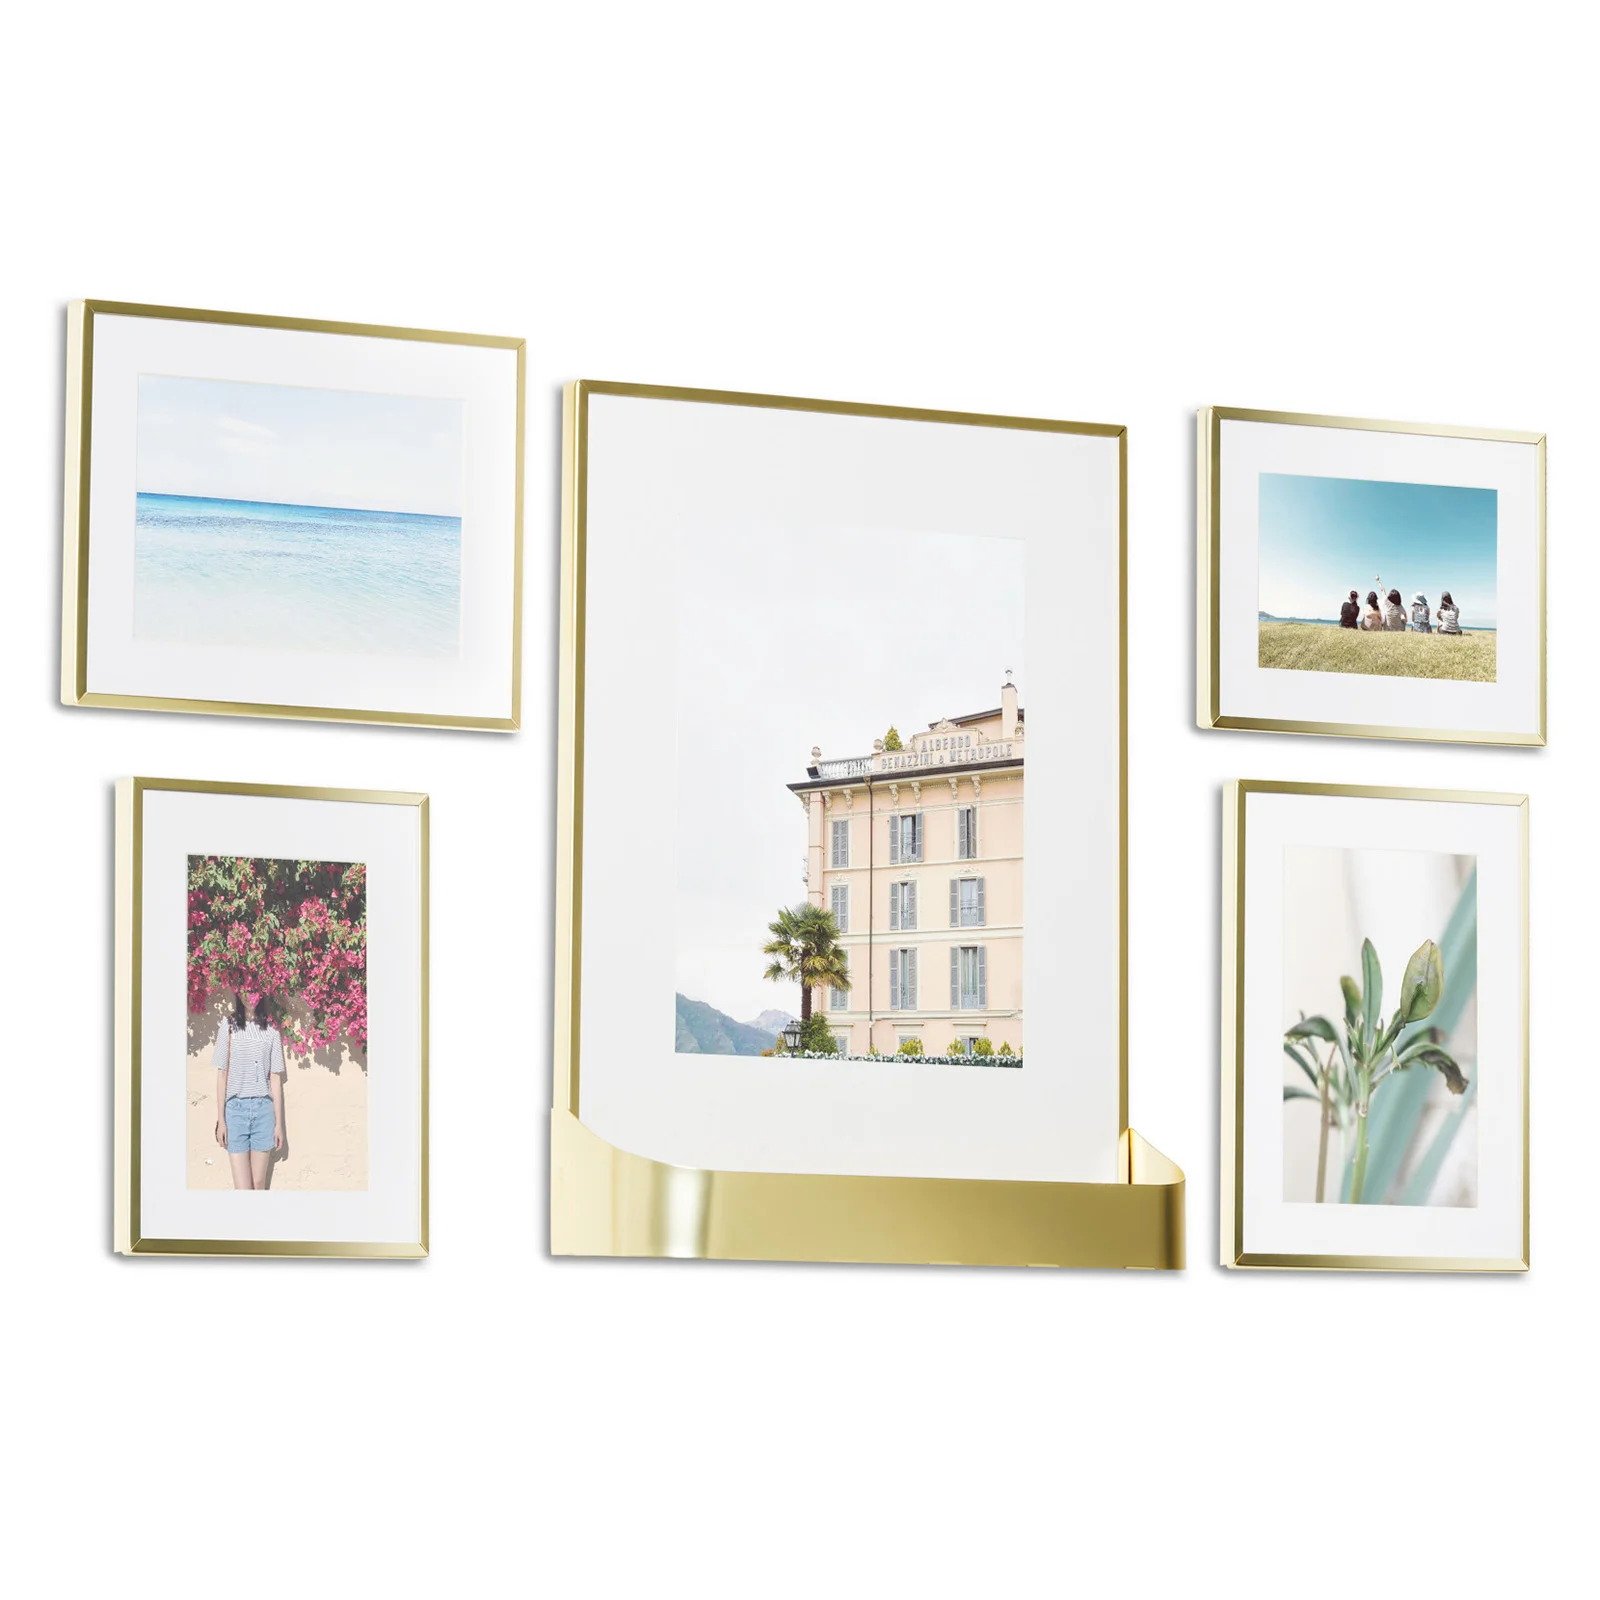 Umbra Matinee Gallery Frames (Set of 5) - Matte Brass Image 1